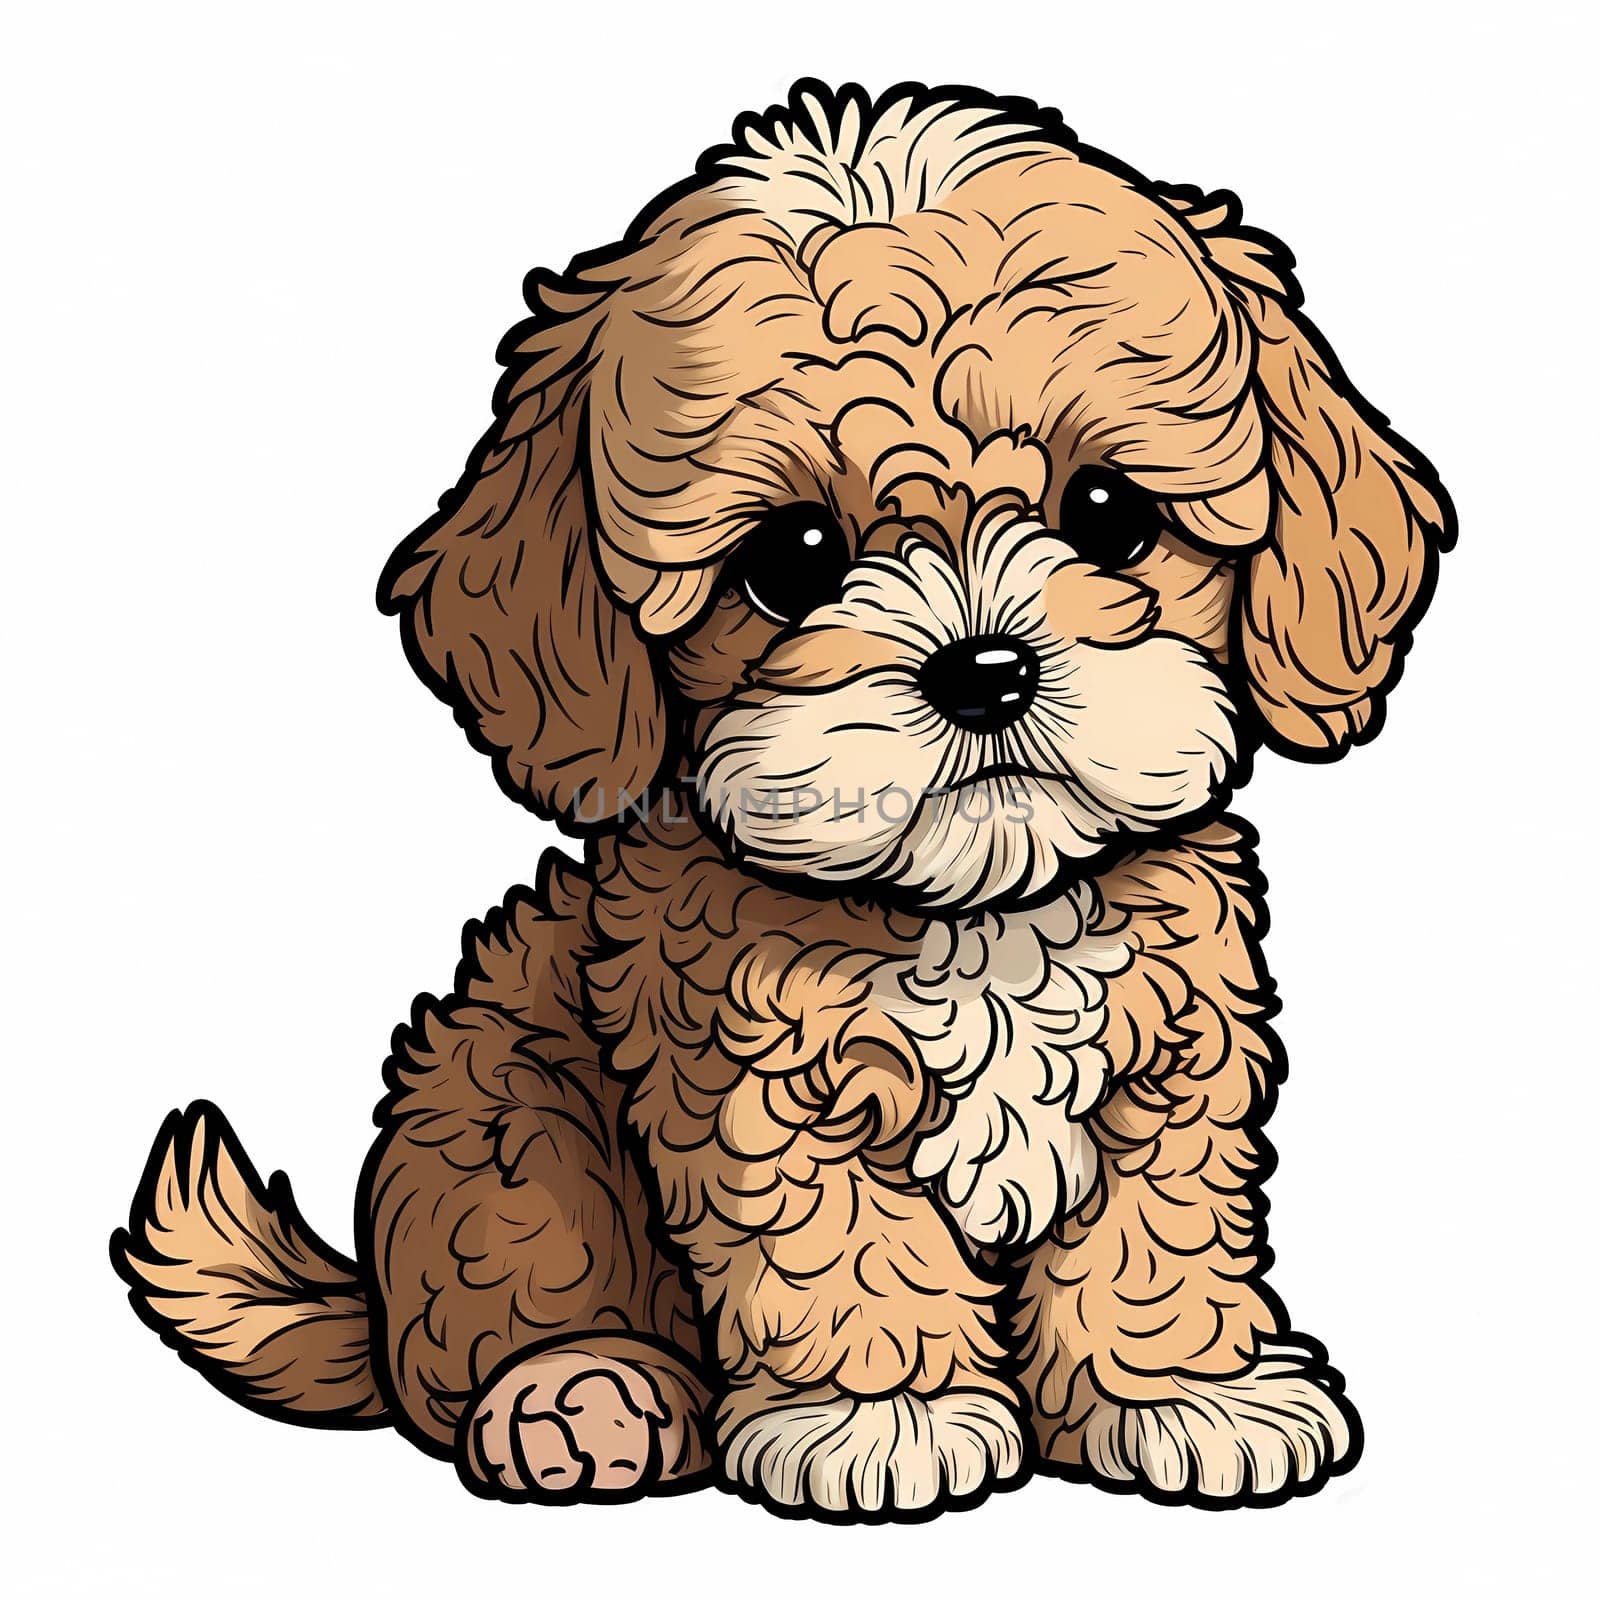 Cute cartoon dog illustration, clipart, sticker. Unique design by AndreyKENO